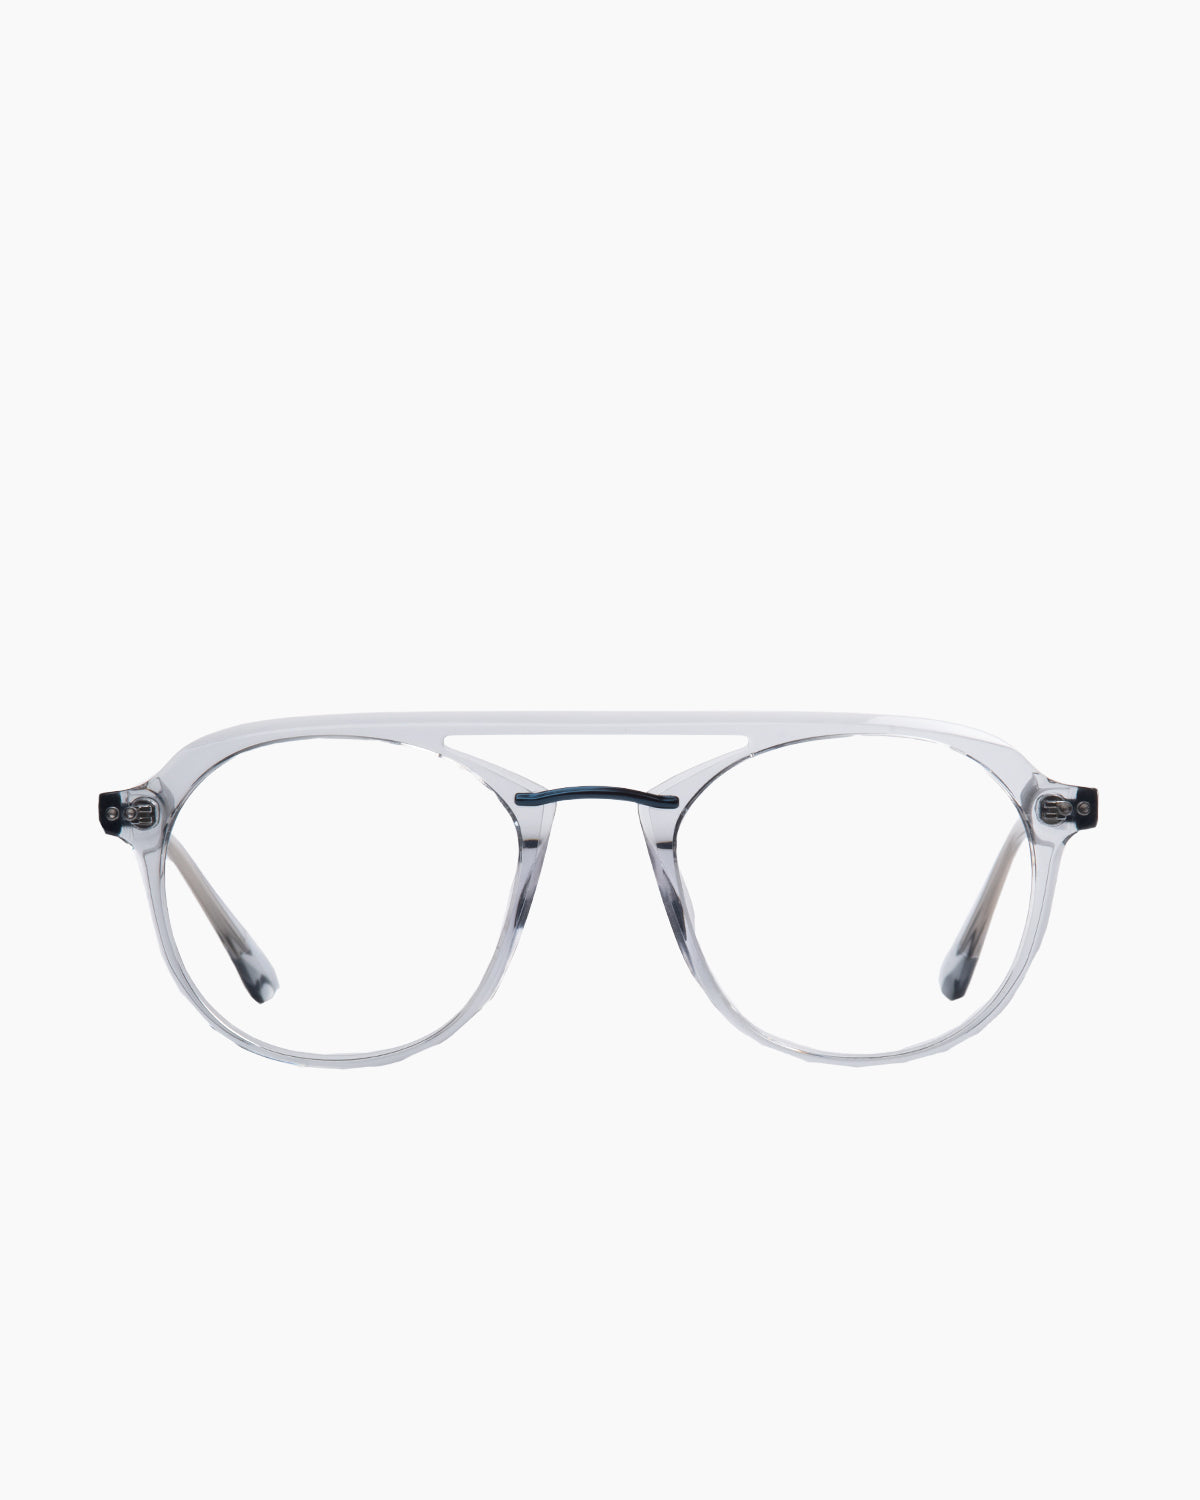 Evolve - Bandit - 310 | Bar à lunettes:  Marie-Sophie Dion